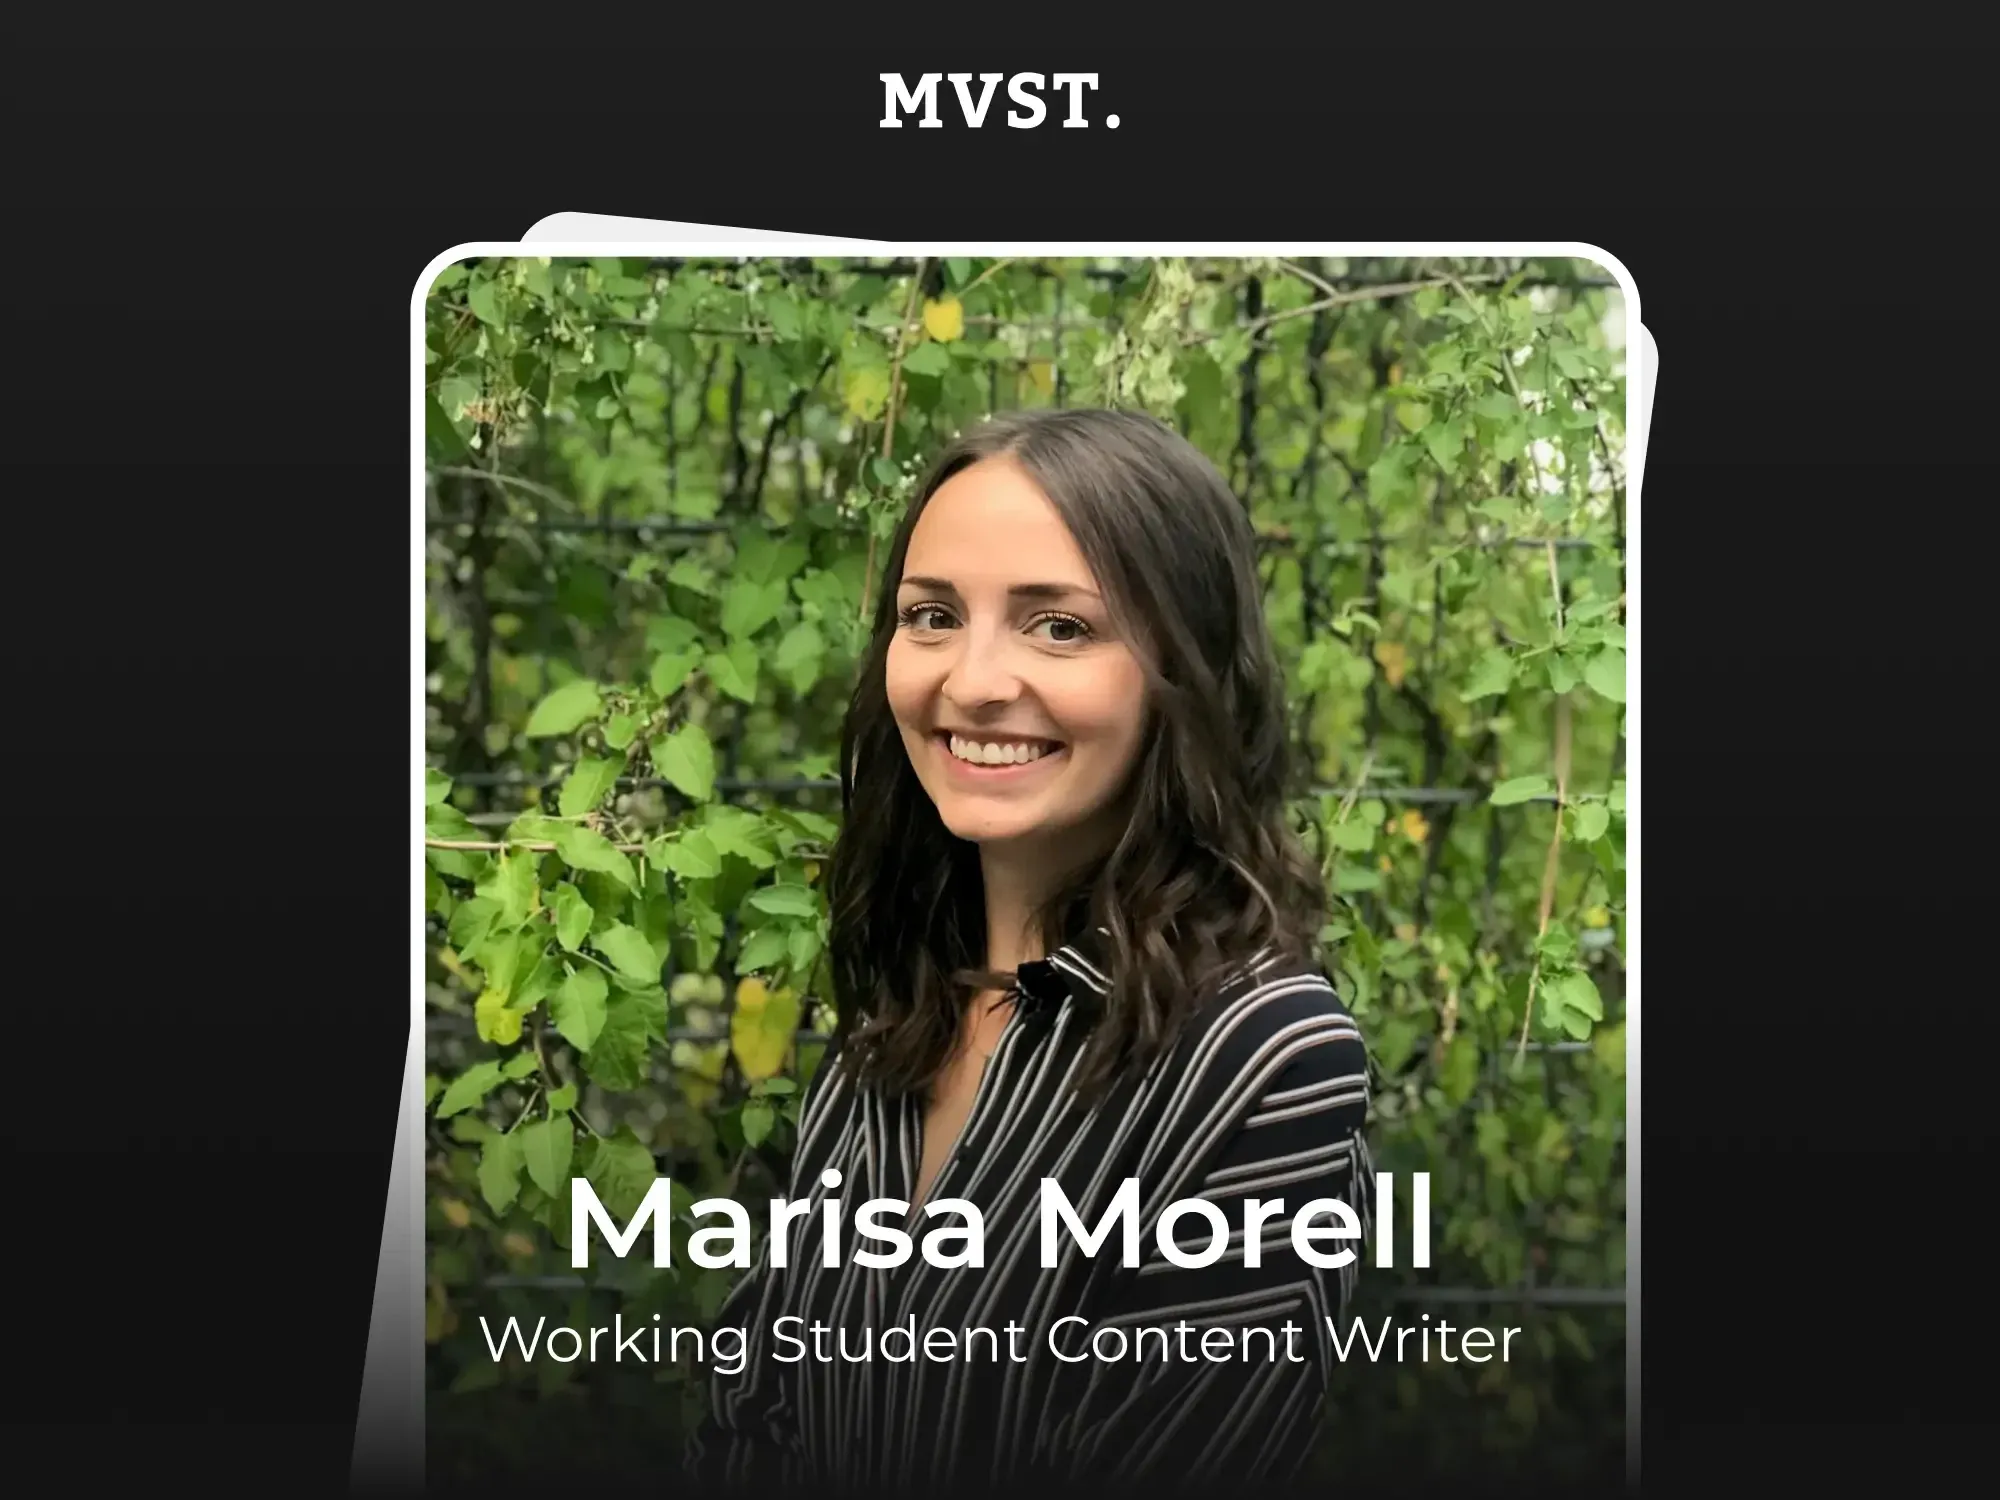 Welcome to MVST, Marisa!